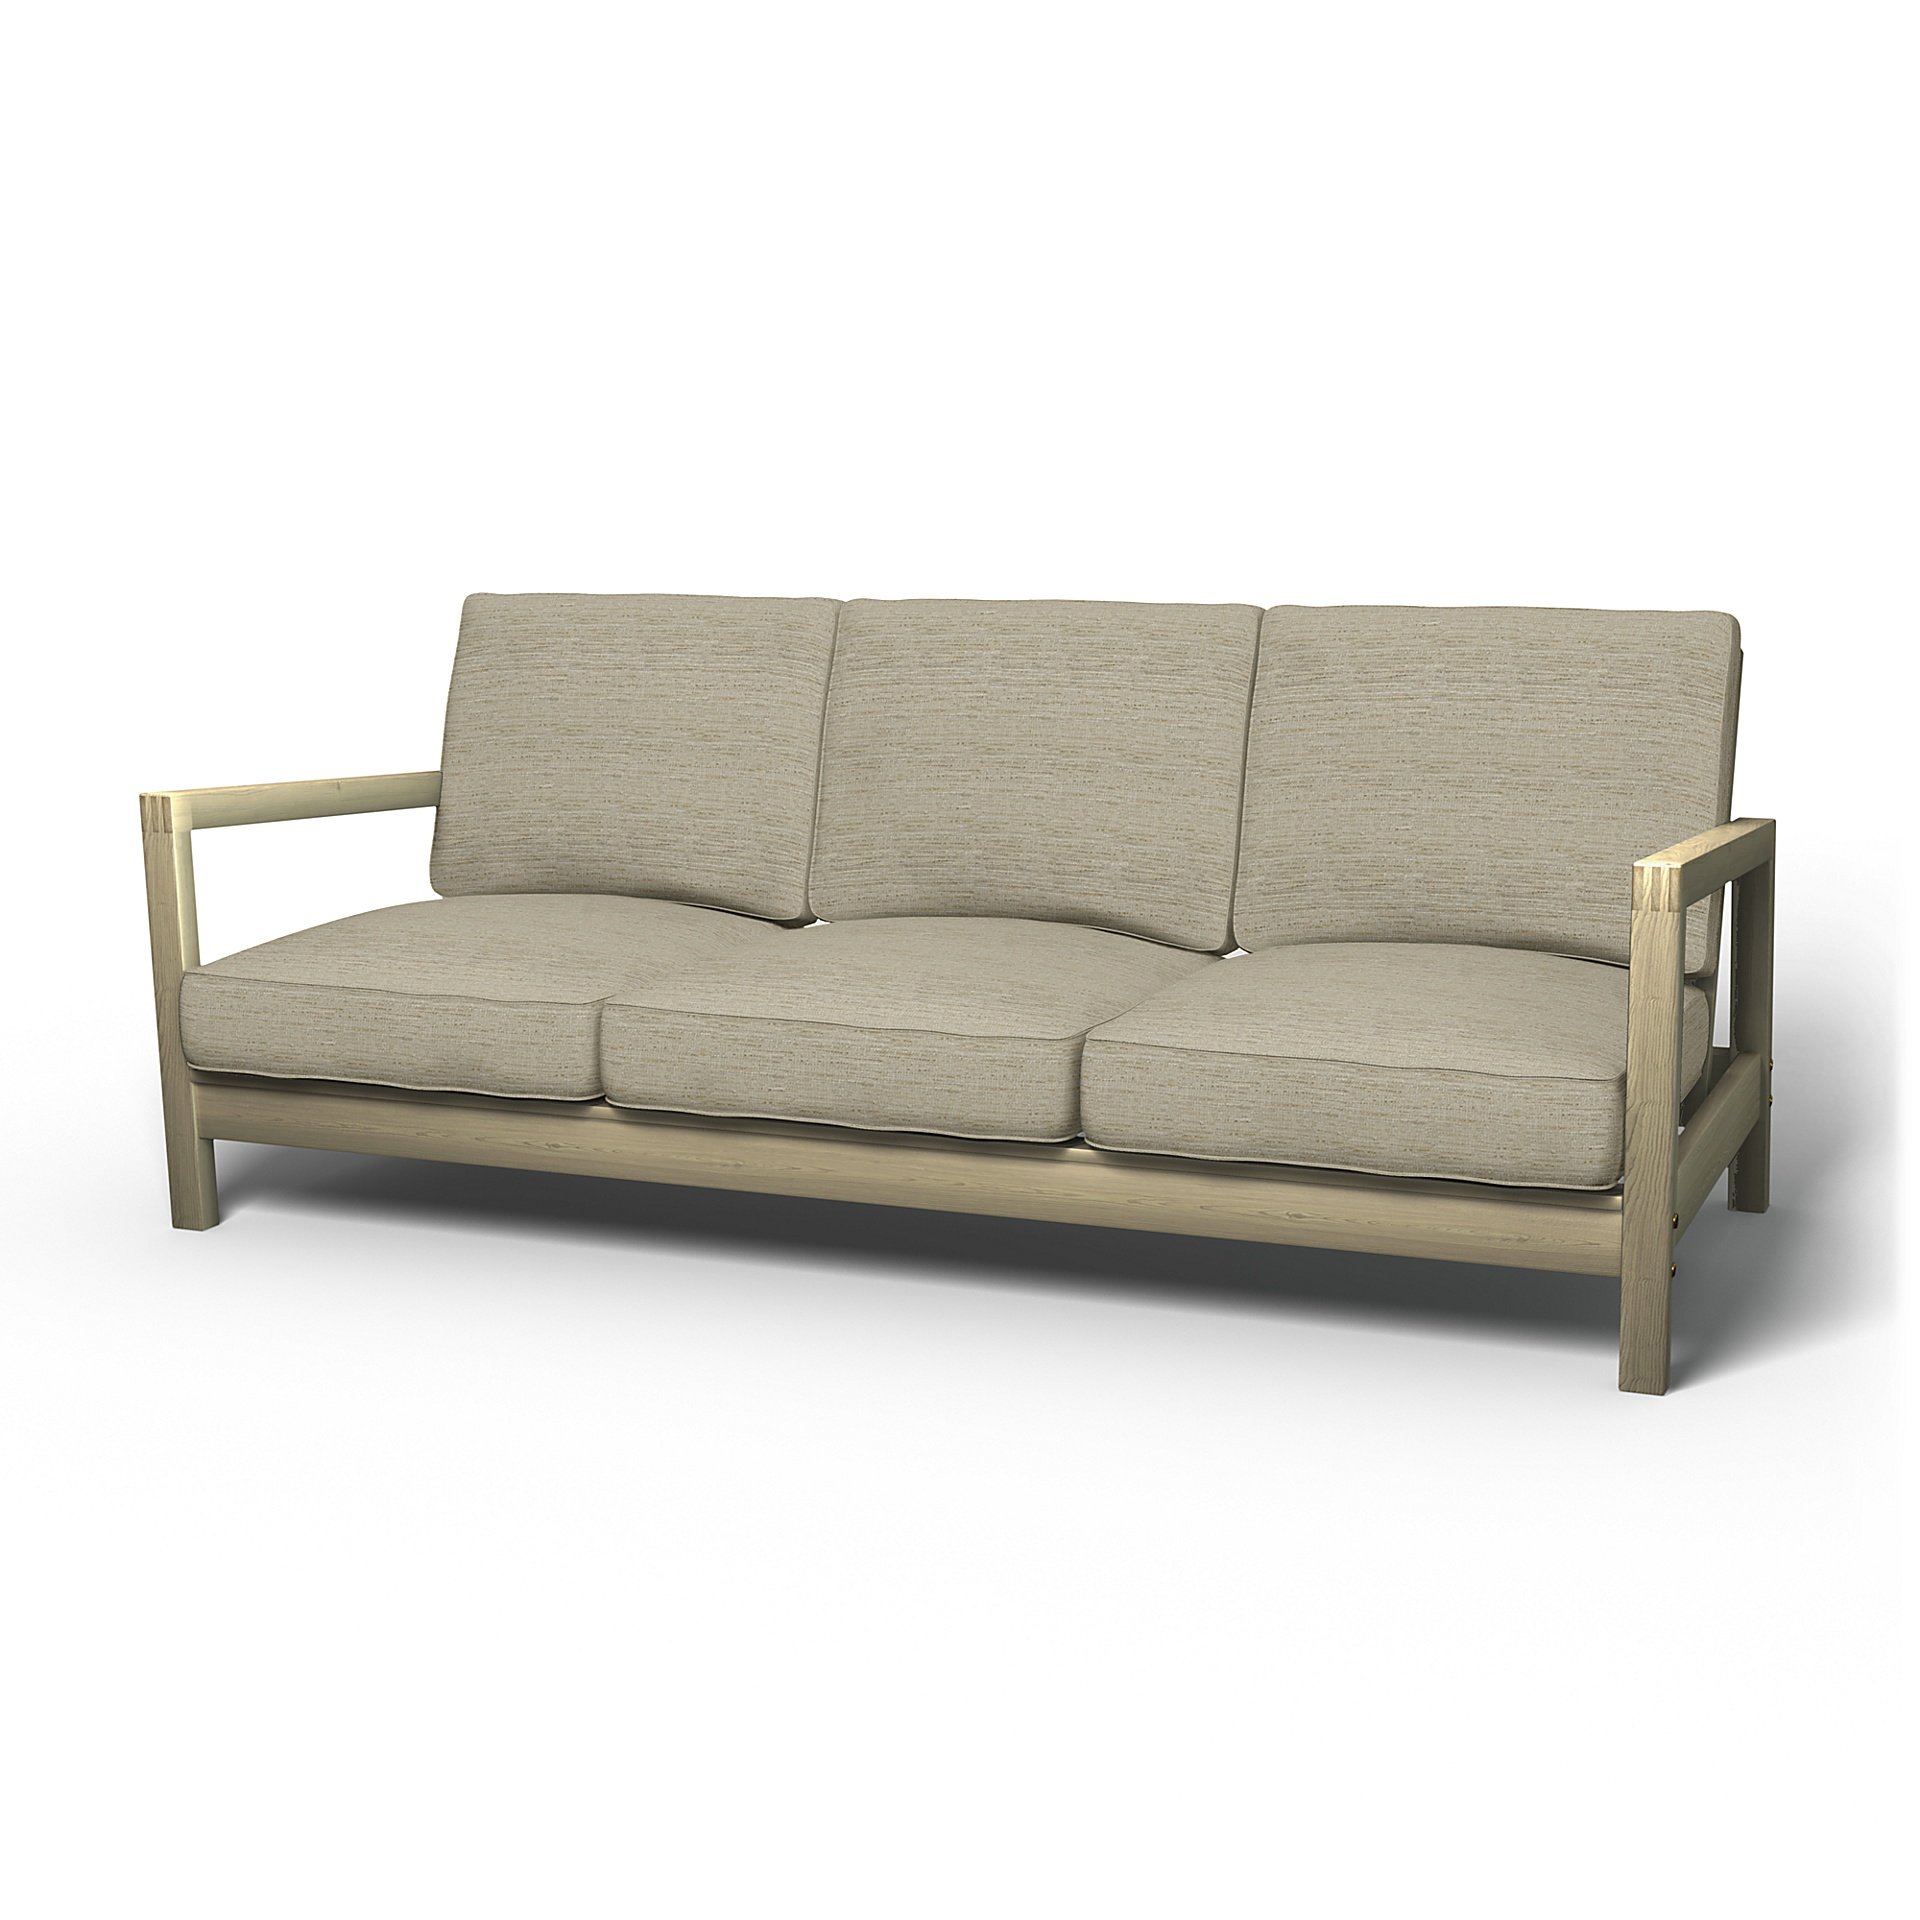 IKEA - Lillberg 3 Seater Sofa Cover, Light Sand, Boucle & Texture - Bemz